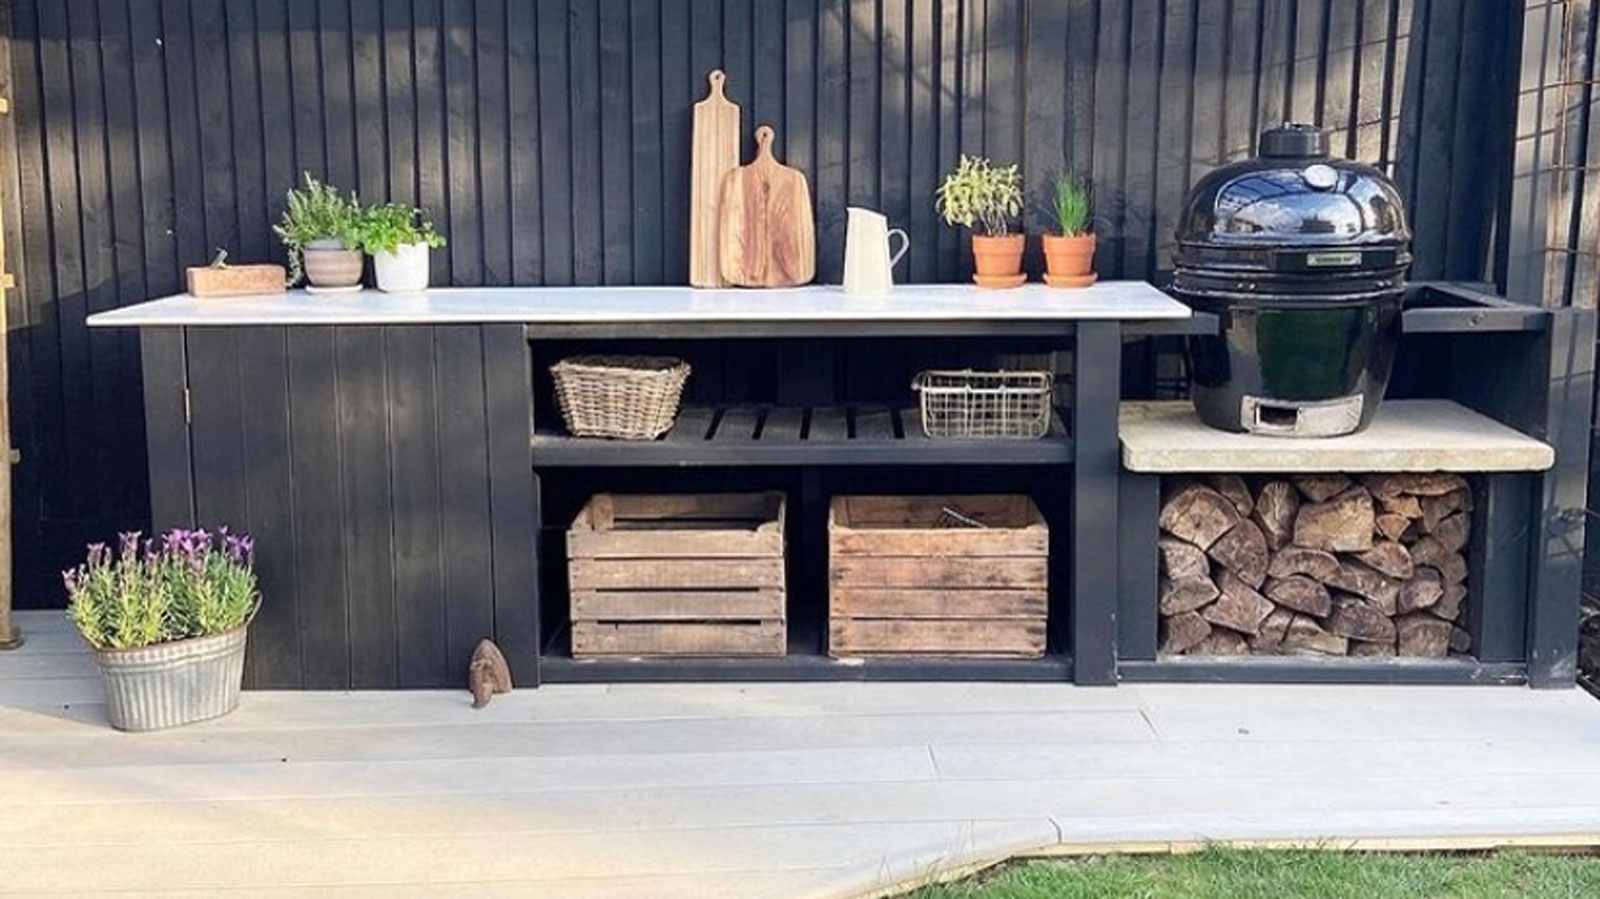 DIY fans make black outdoor kitchen for £20   Real Homes